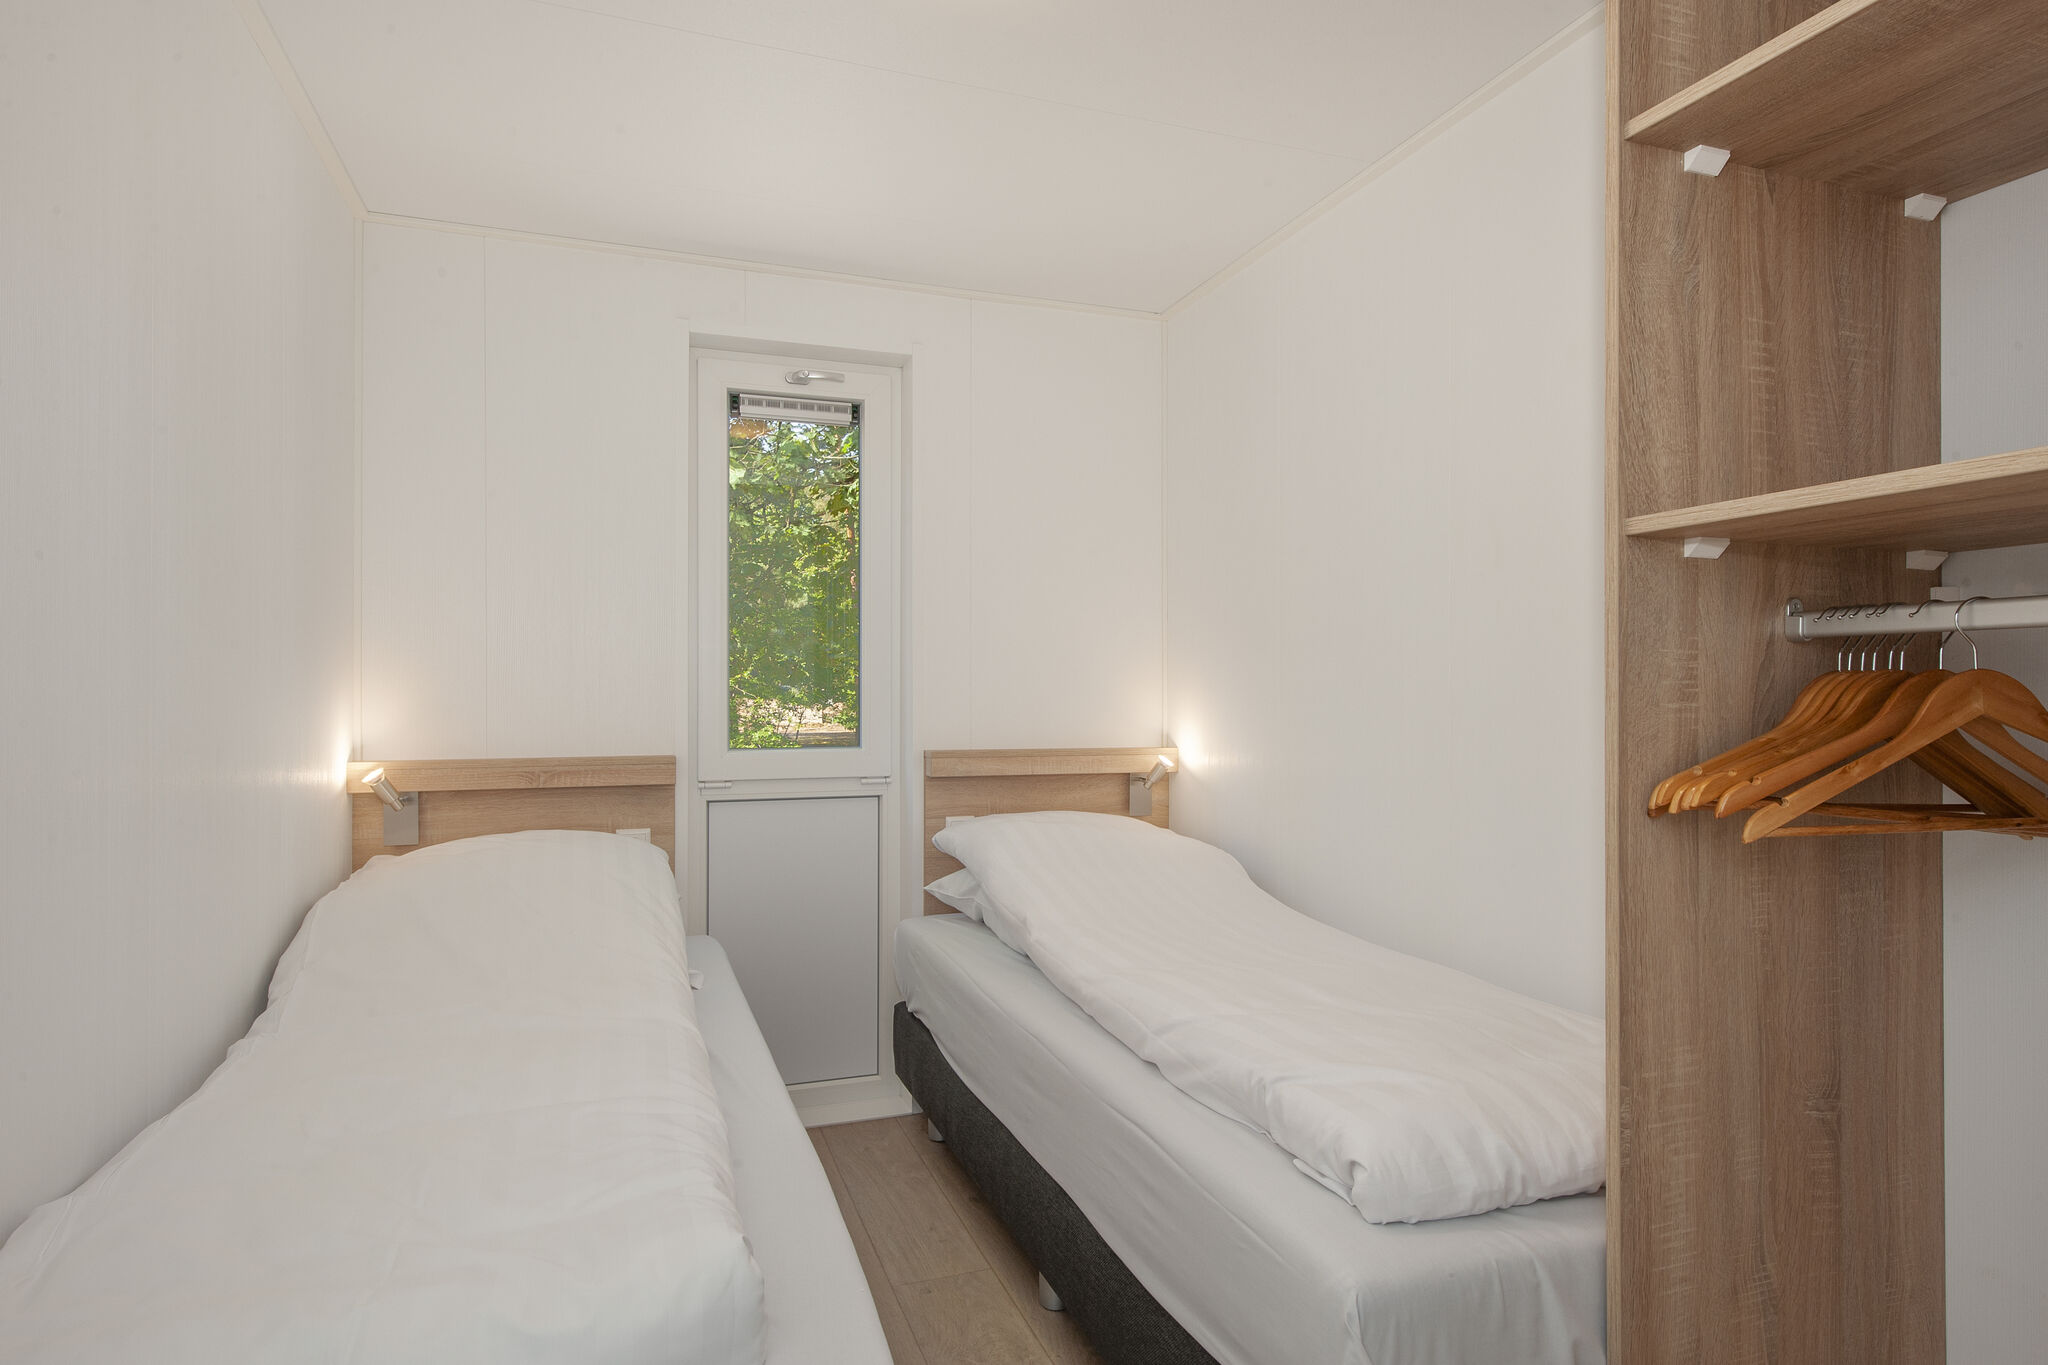 Modern lodge with infrared sauna, 8km from Helmond